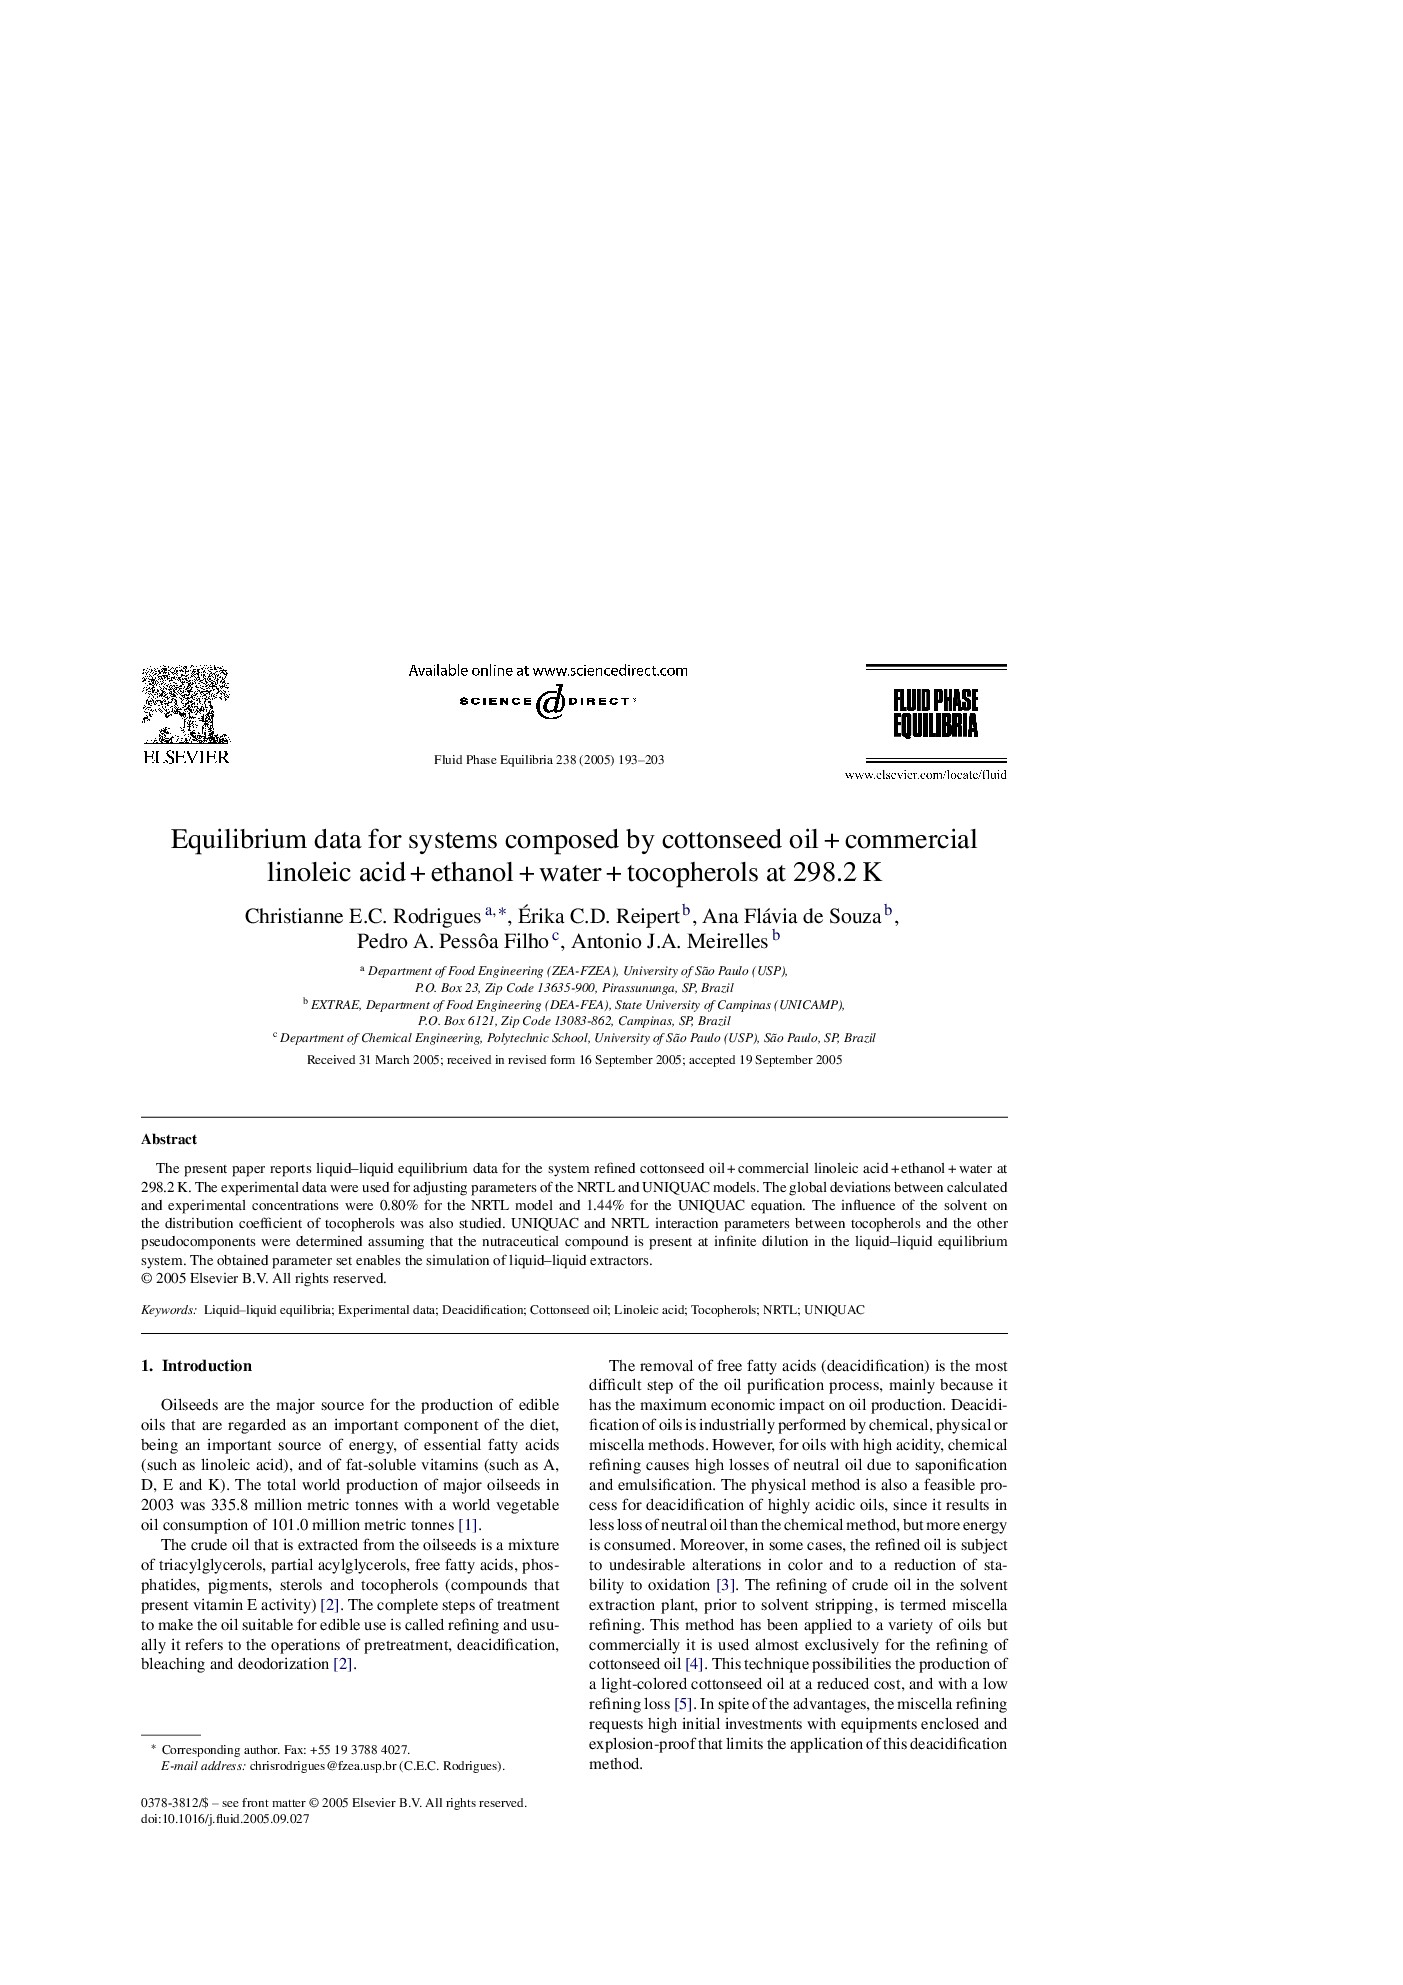 Equilibrium data for systems composed by cottonseed oilÂ +Â commercial linoleic acidÂ +Â ethanolÂ +Â waterÂ +Â tocopherols at 298.2Â K